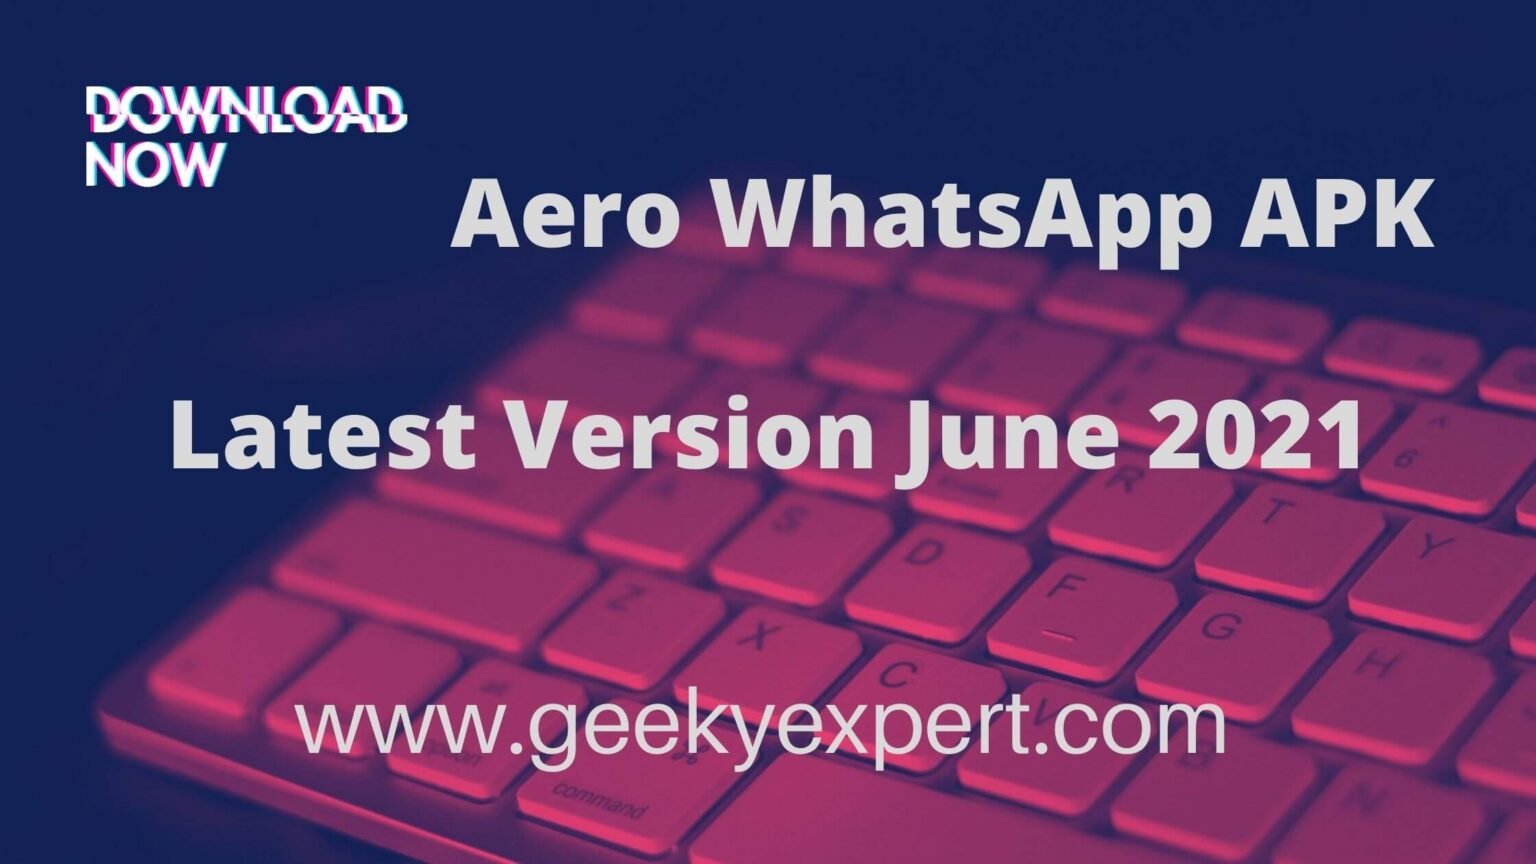 aero whatsapp new version download